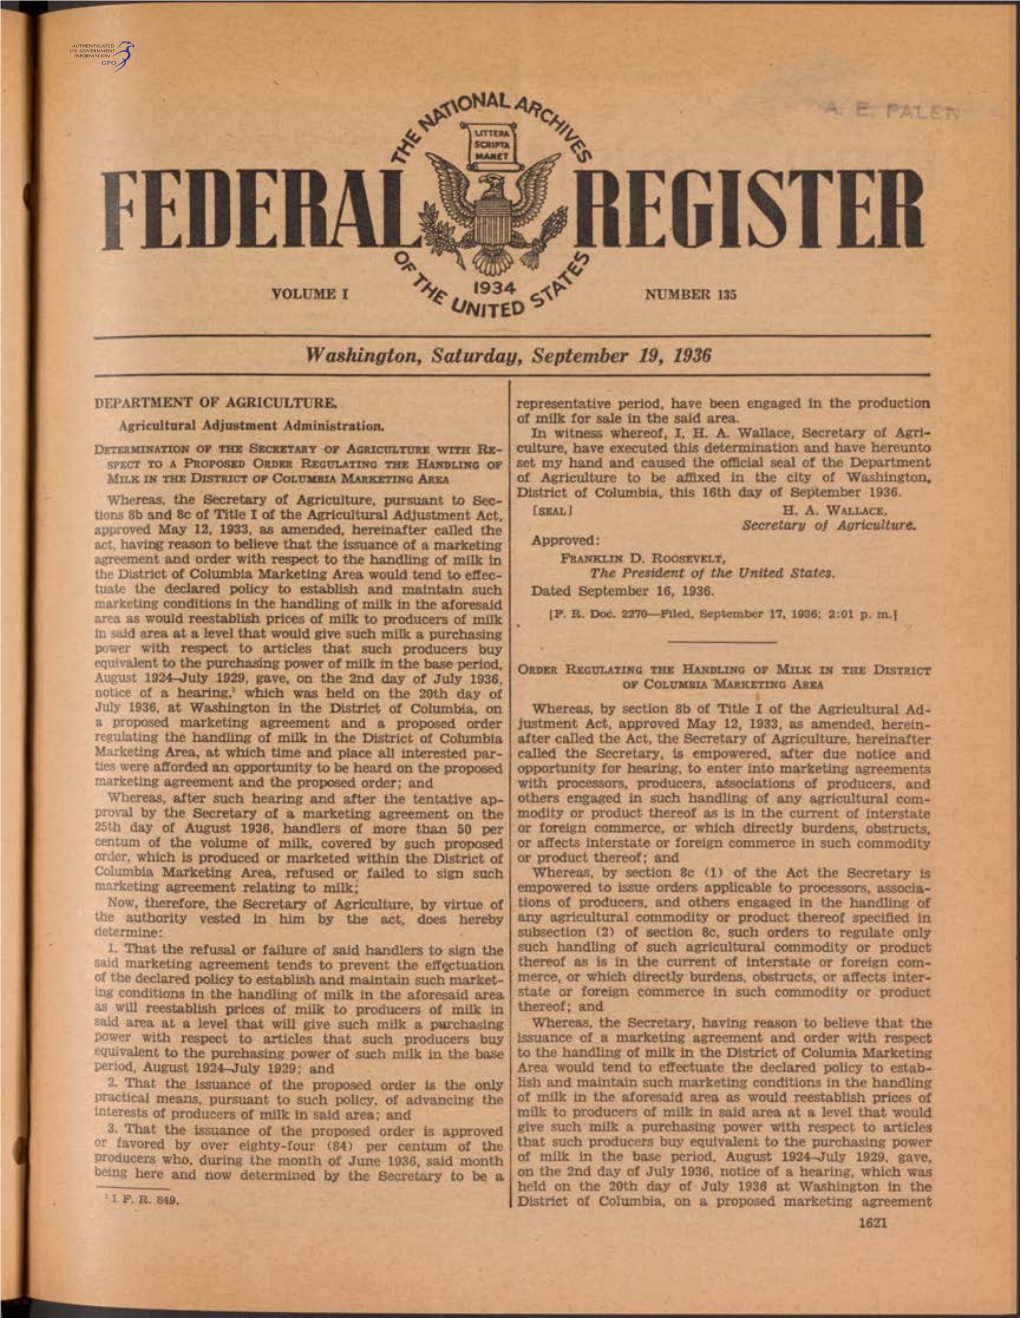 FEDERAL REGISTER, September 19, 1936